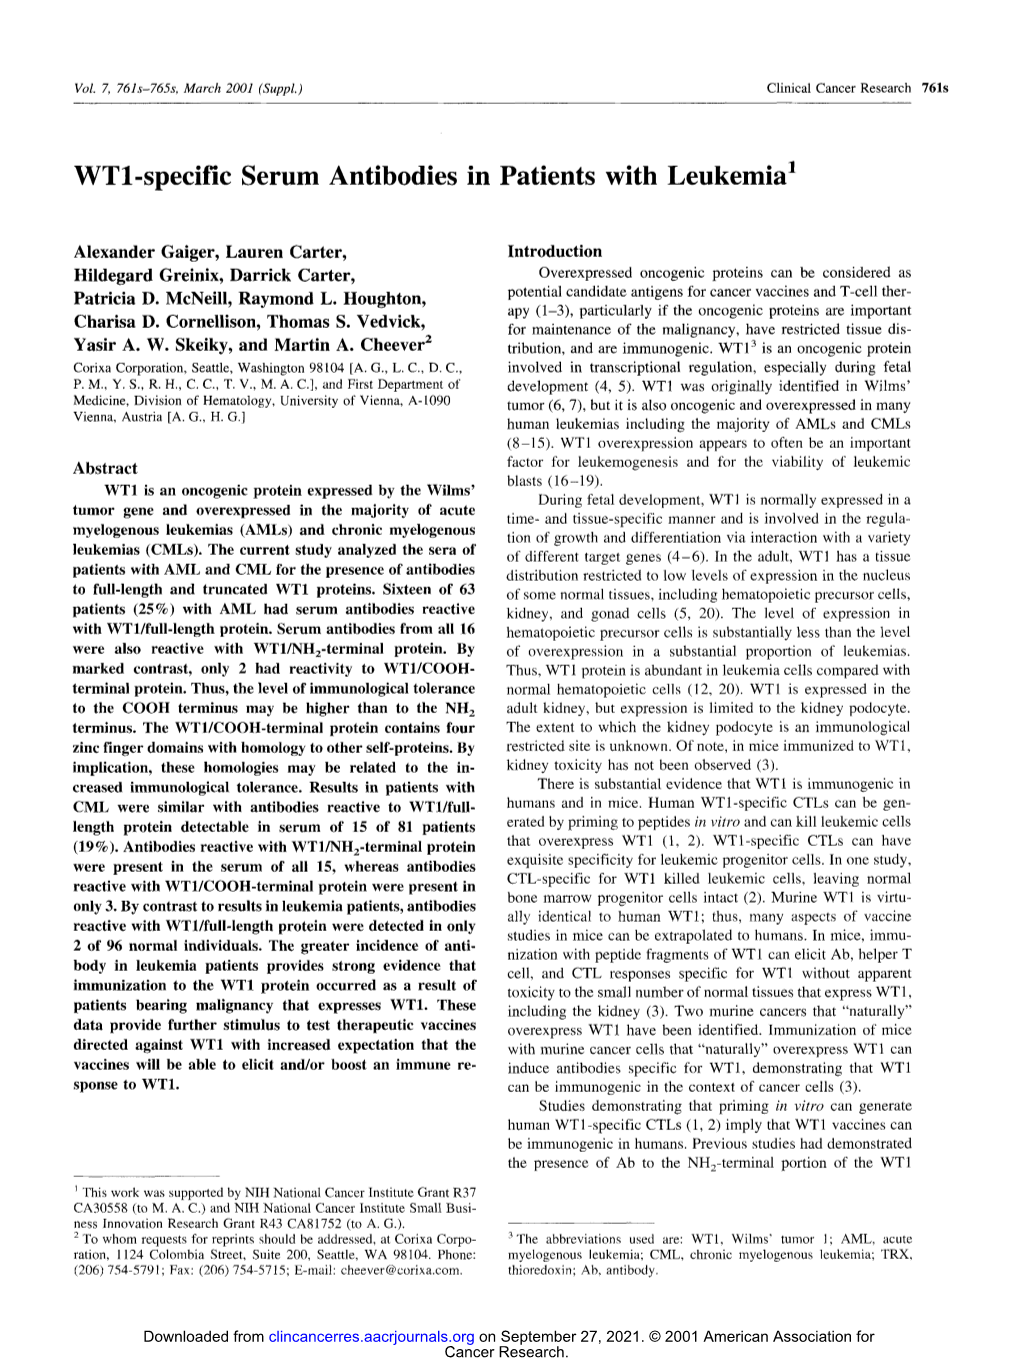 Wtl-Specific Serum Antibodies in Patients with Leukemia 1